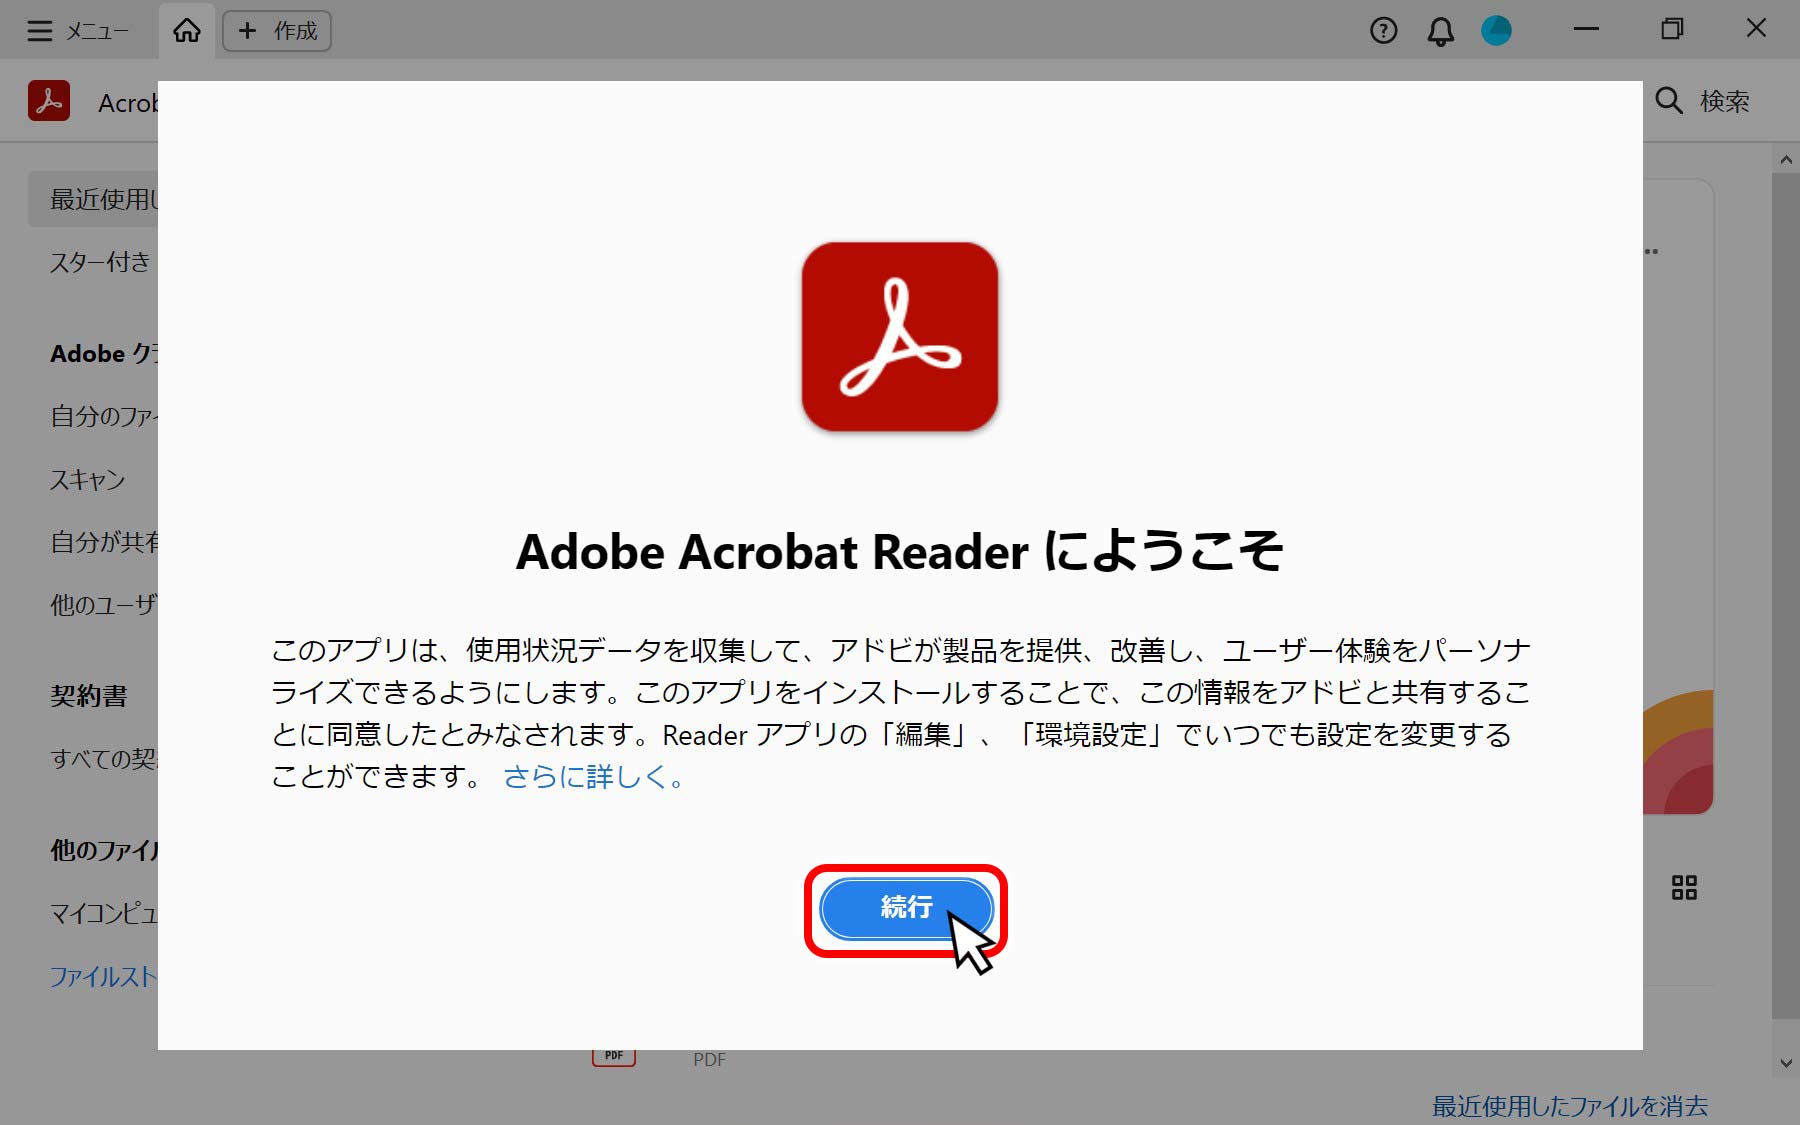 Adobe readerの初回起動画面